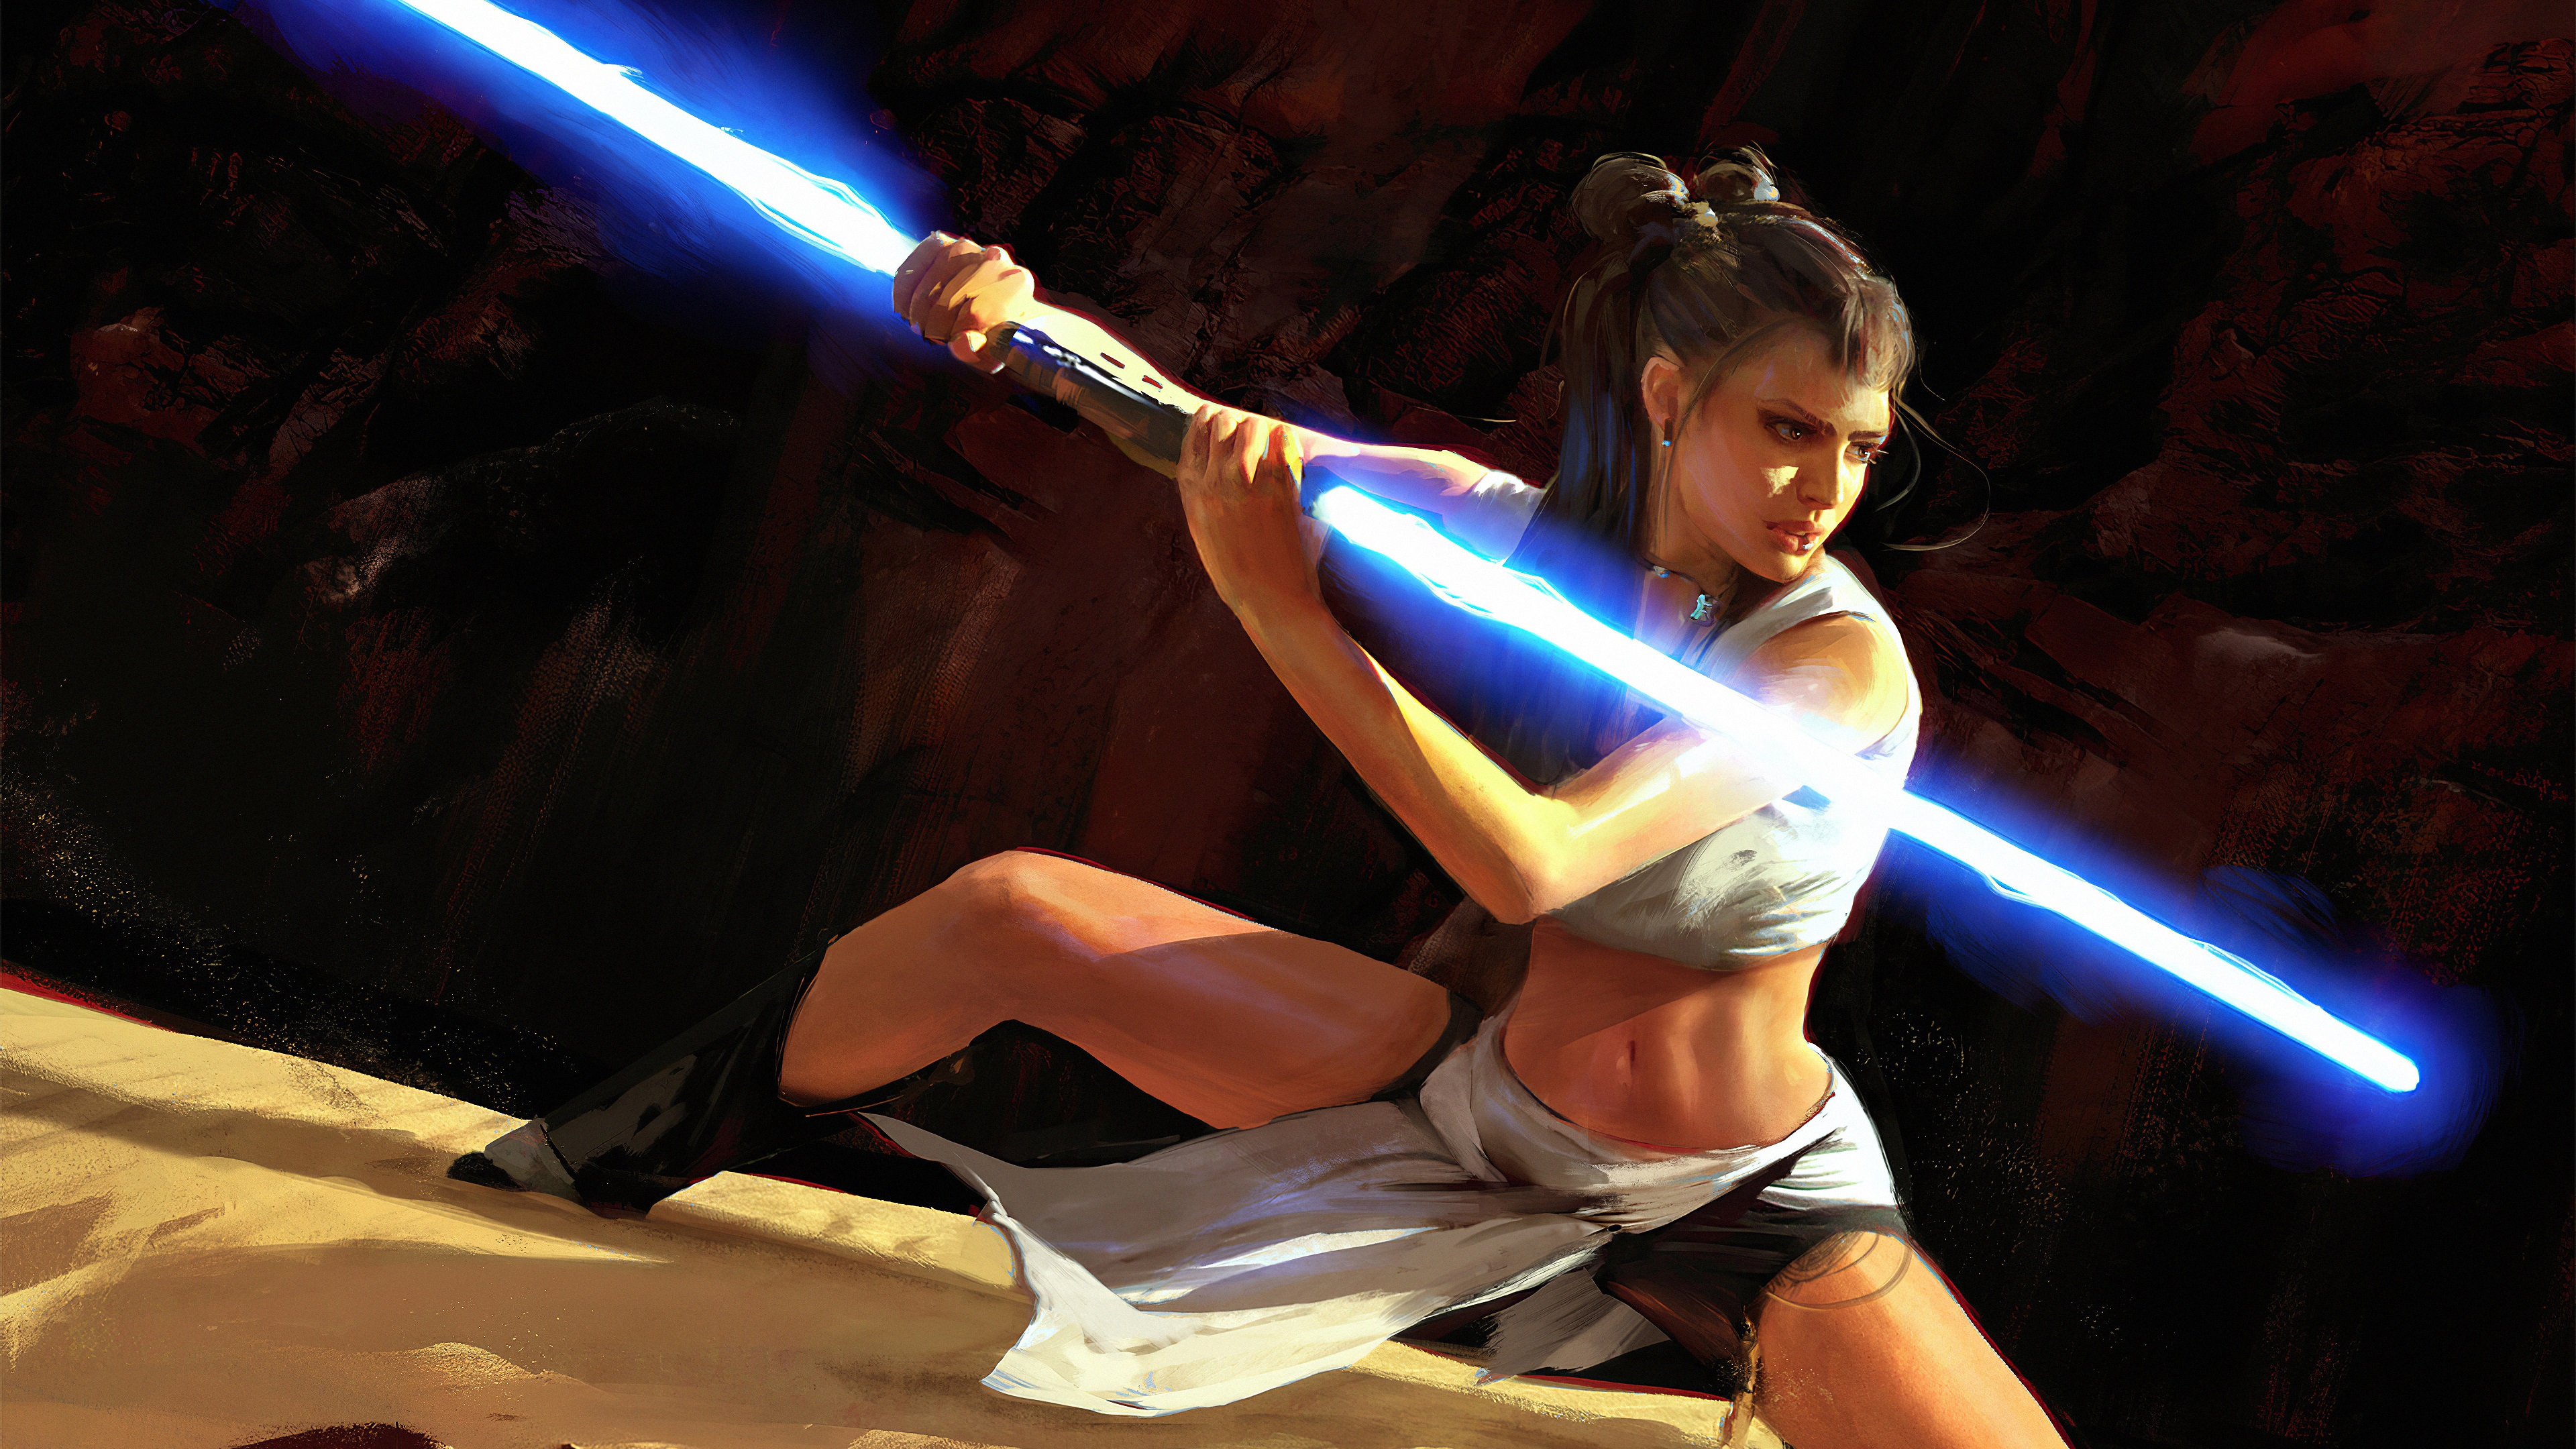 Digital Women Sword Science Fiction Warrior Fantasy Girl Concept Art Wojtek Fus Lightsaber Star Wars 3840x2160